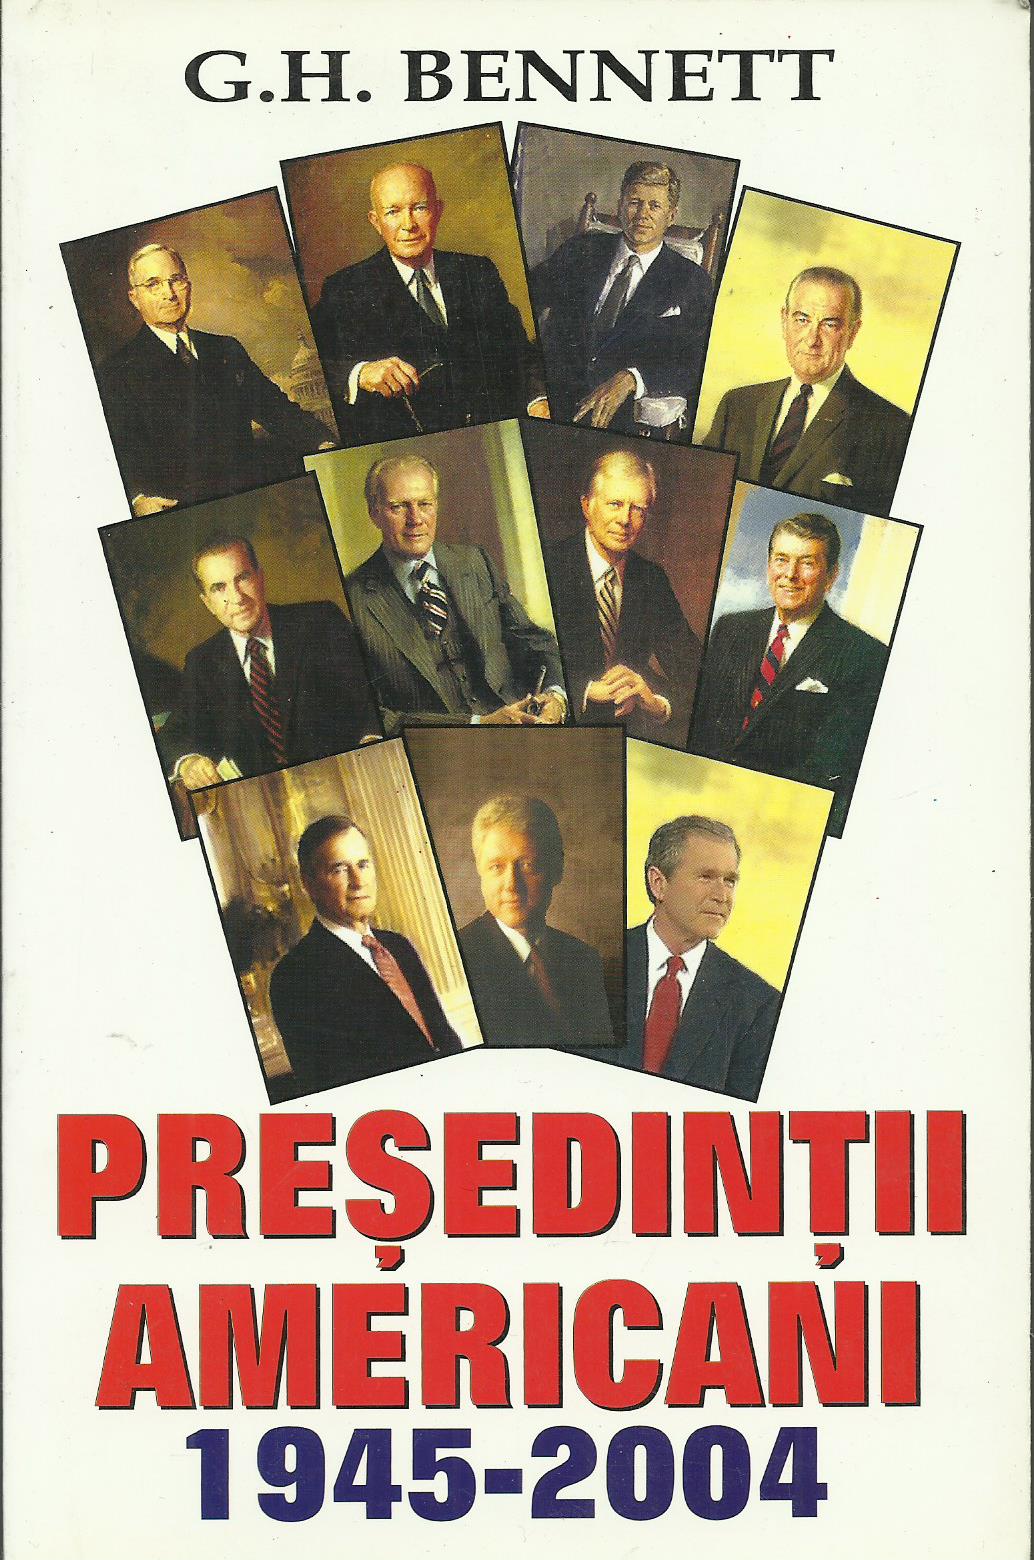 Presedintii americani 1945-2004 - G.H. Bennett